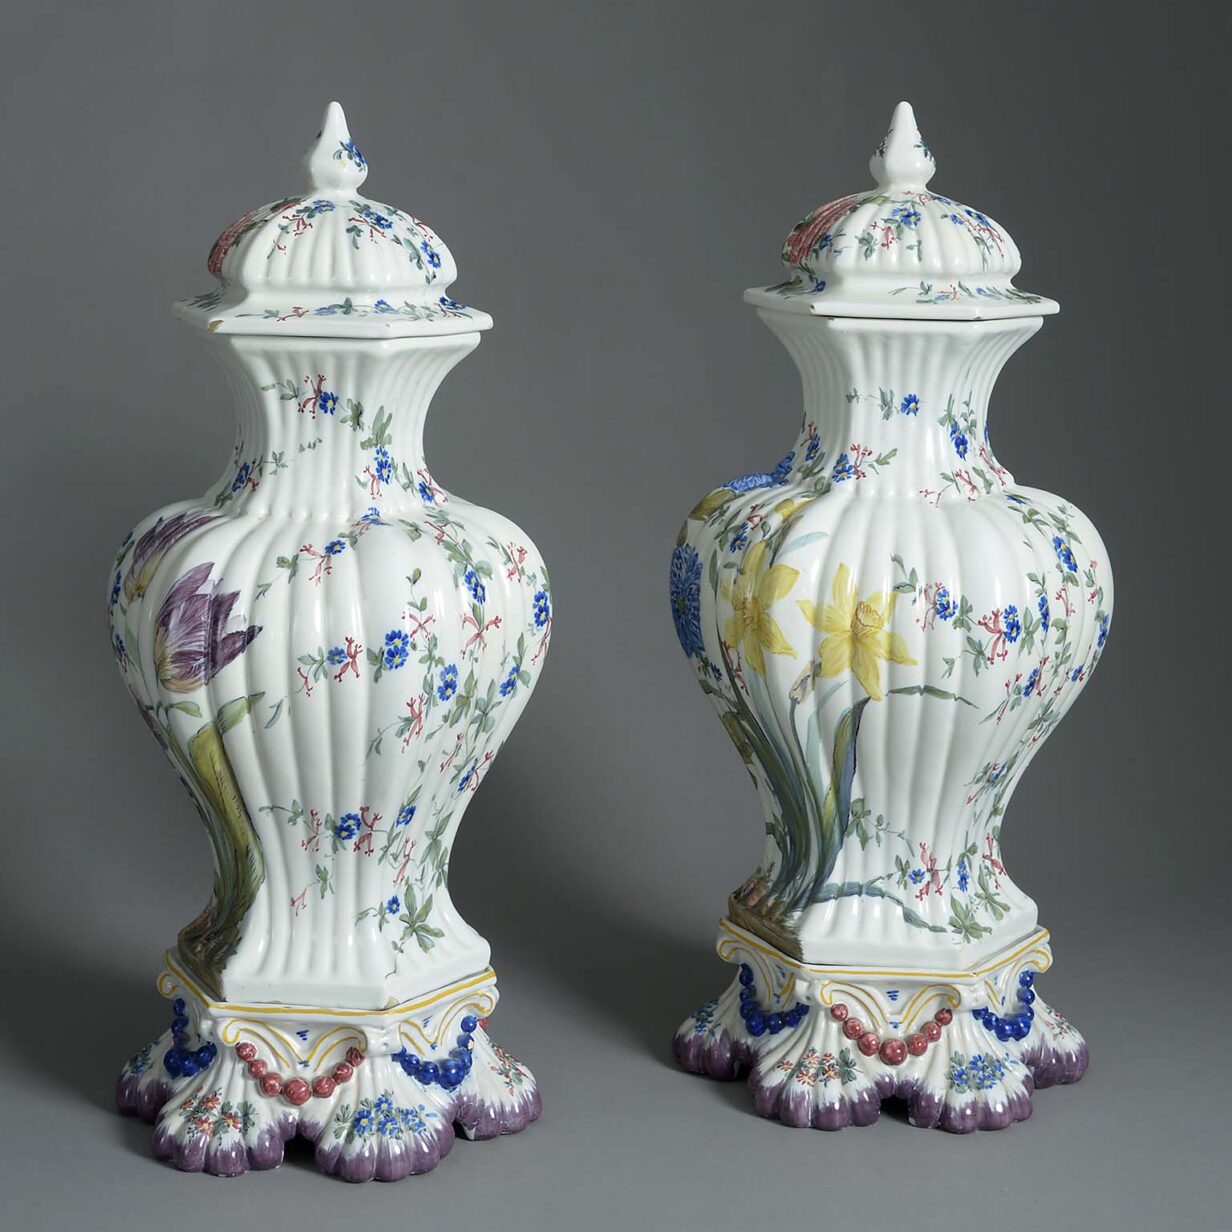 Pair of nove faience vases